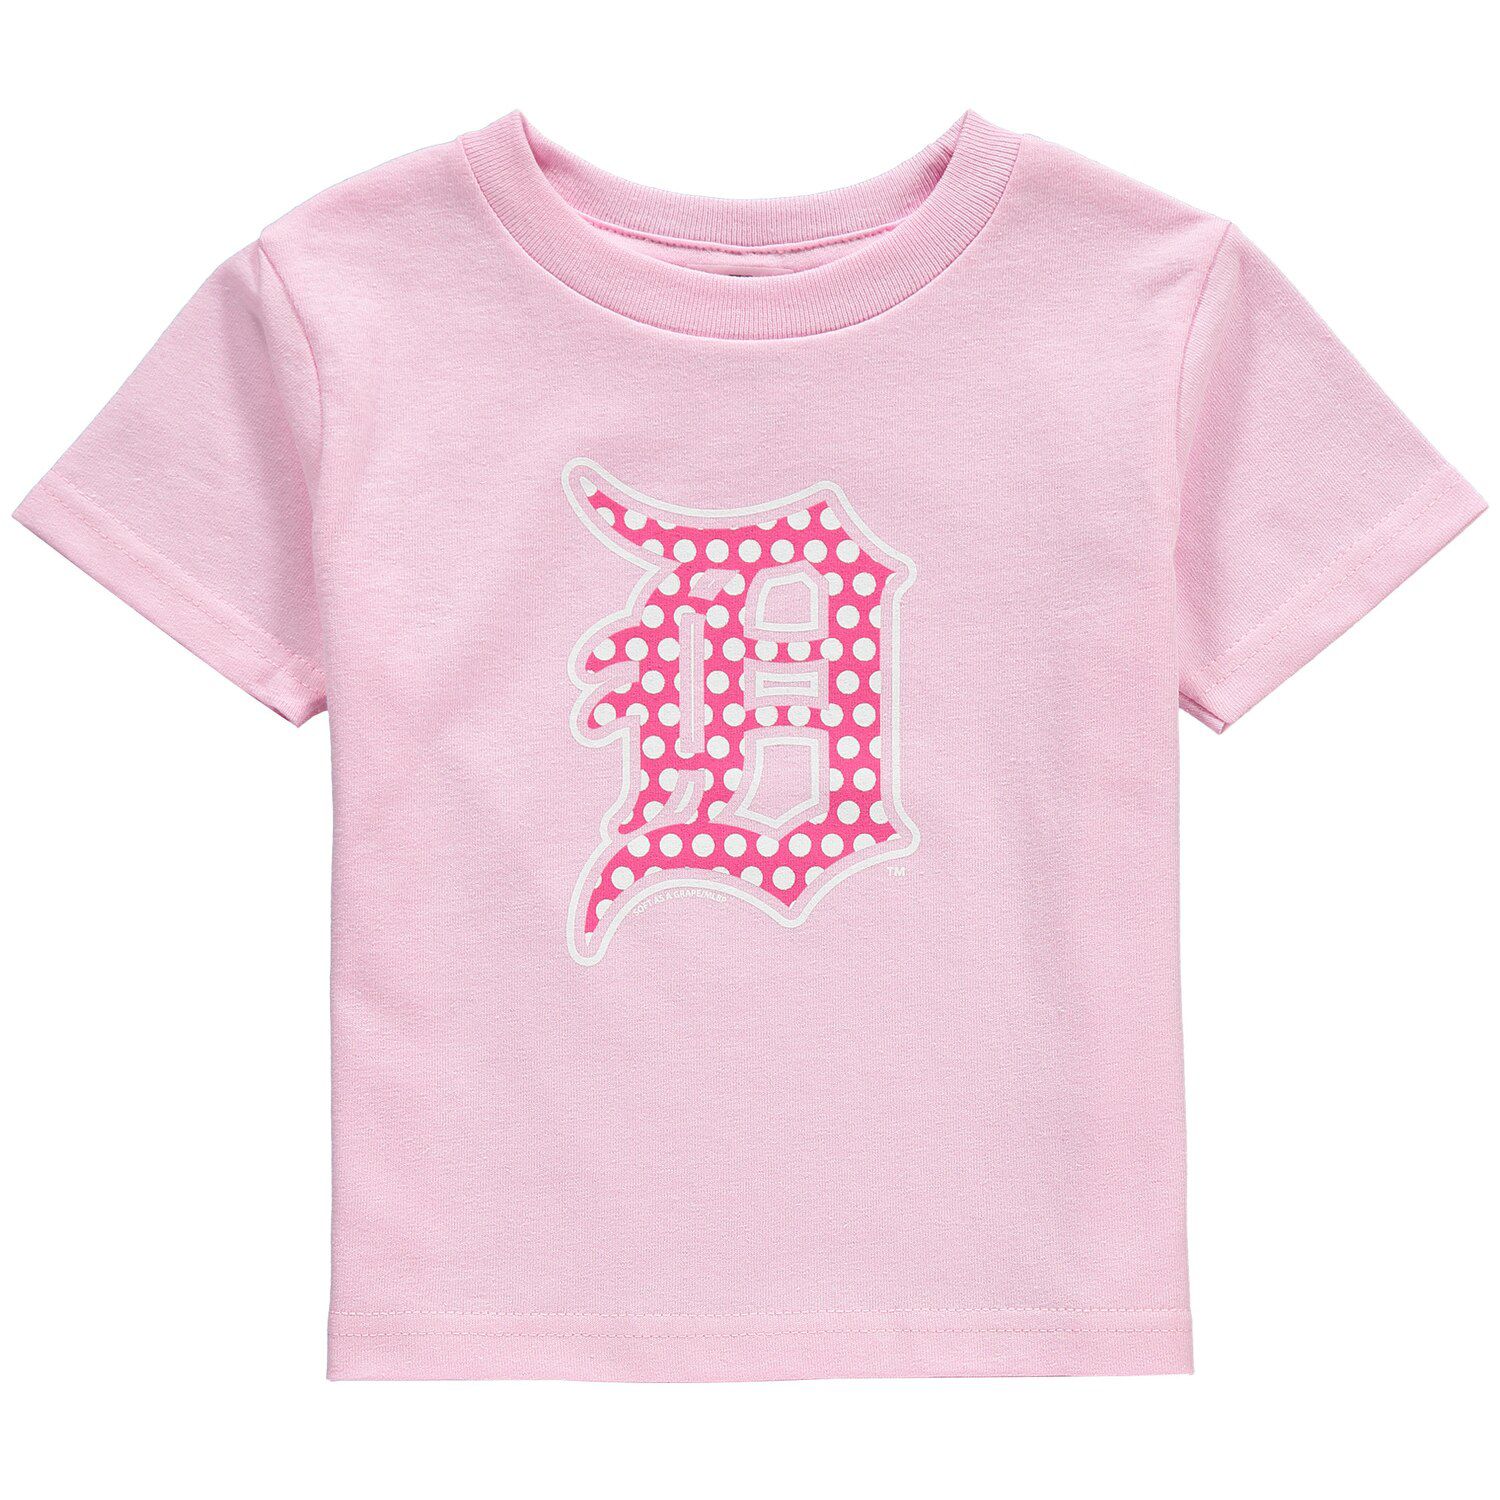 pink detroit tigers t shirt